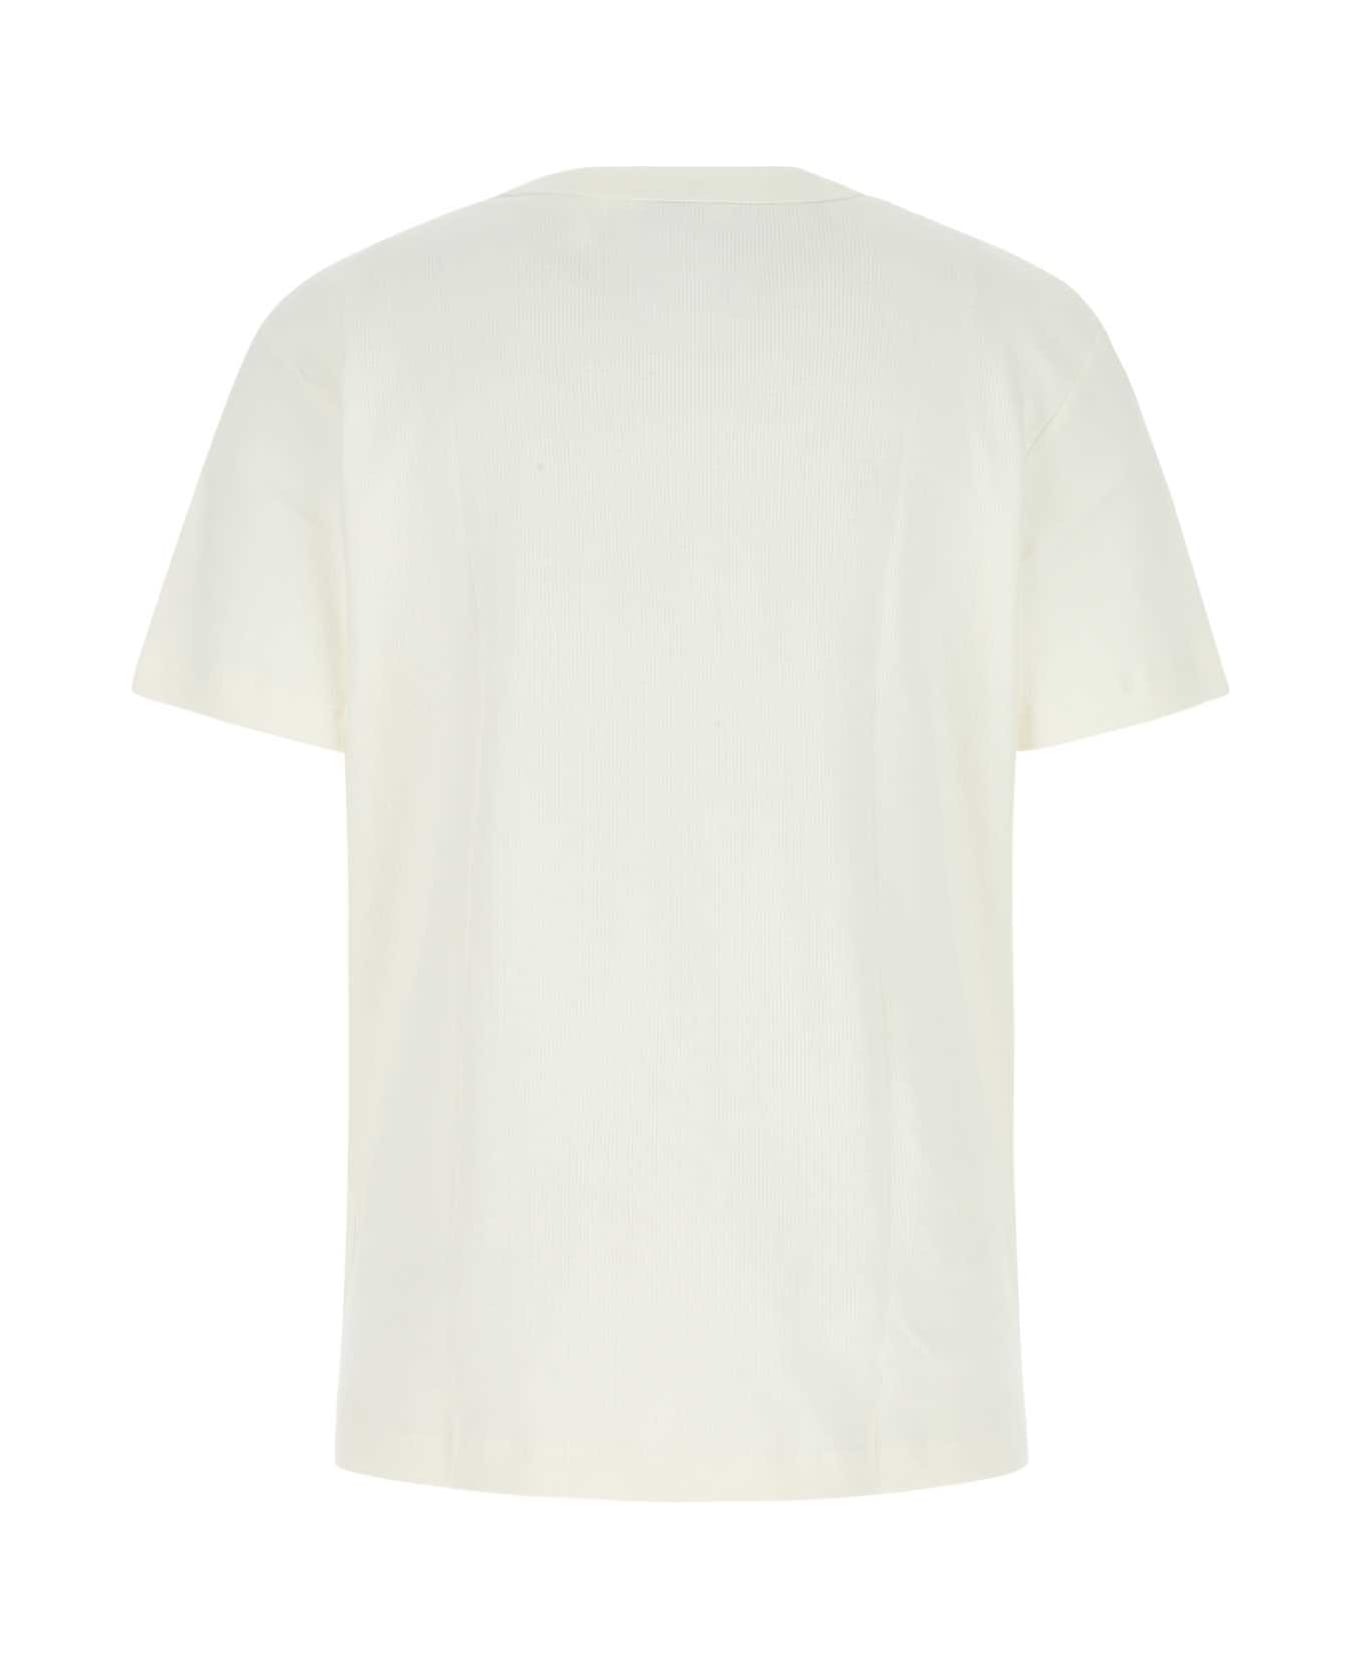 Howlin White Cotton T-shirt - ECRU